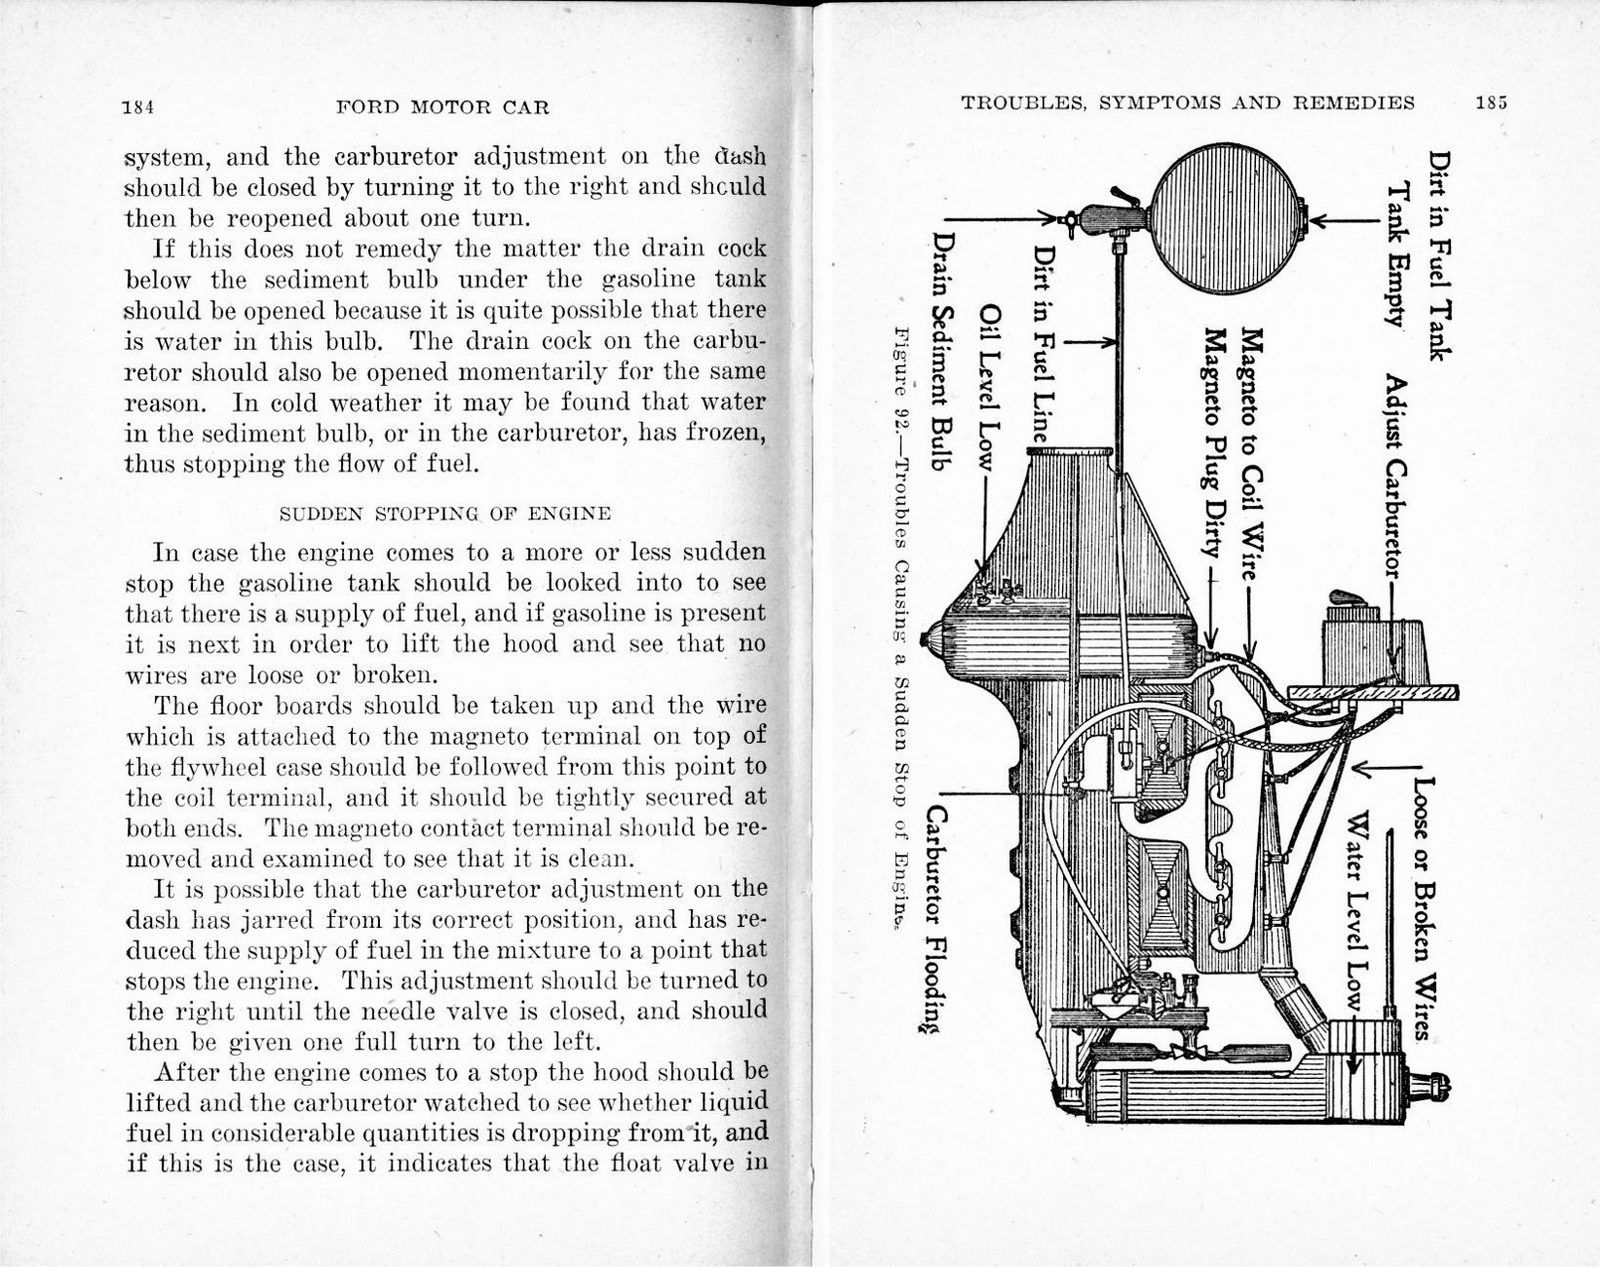 n_1917 Ford Car & Truck Manual-184-185.jpg